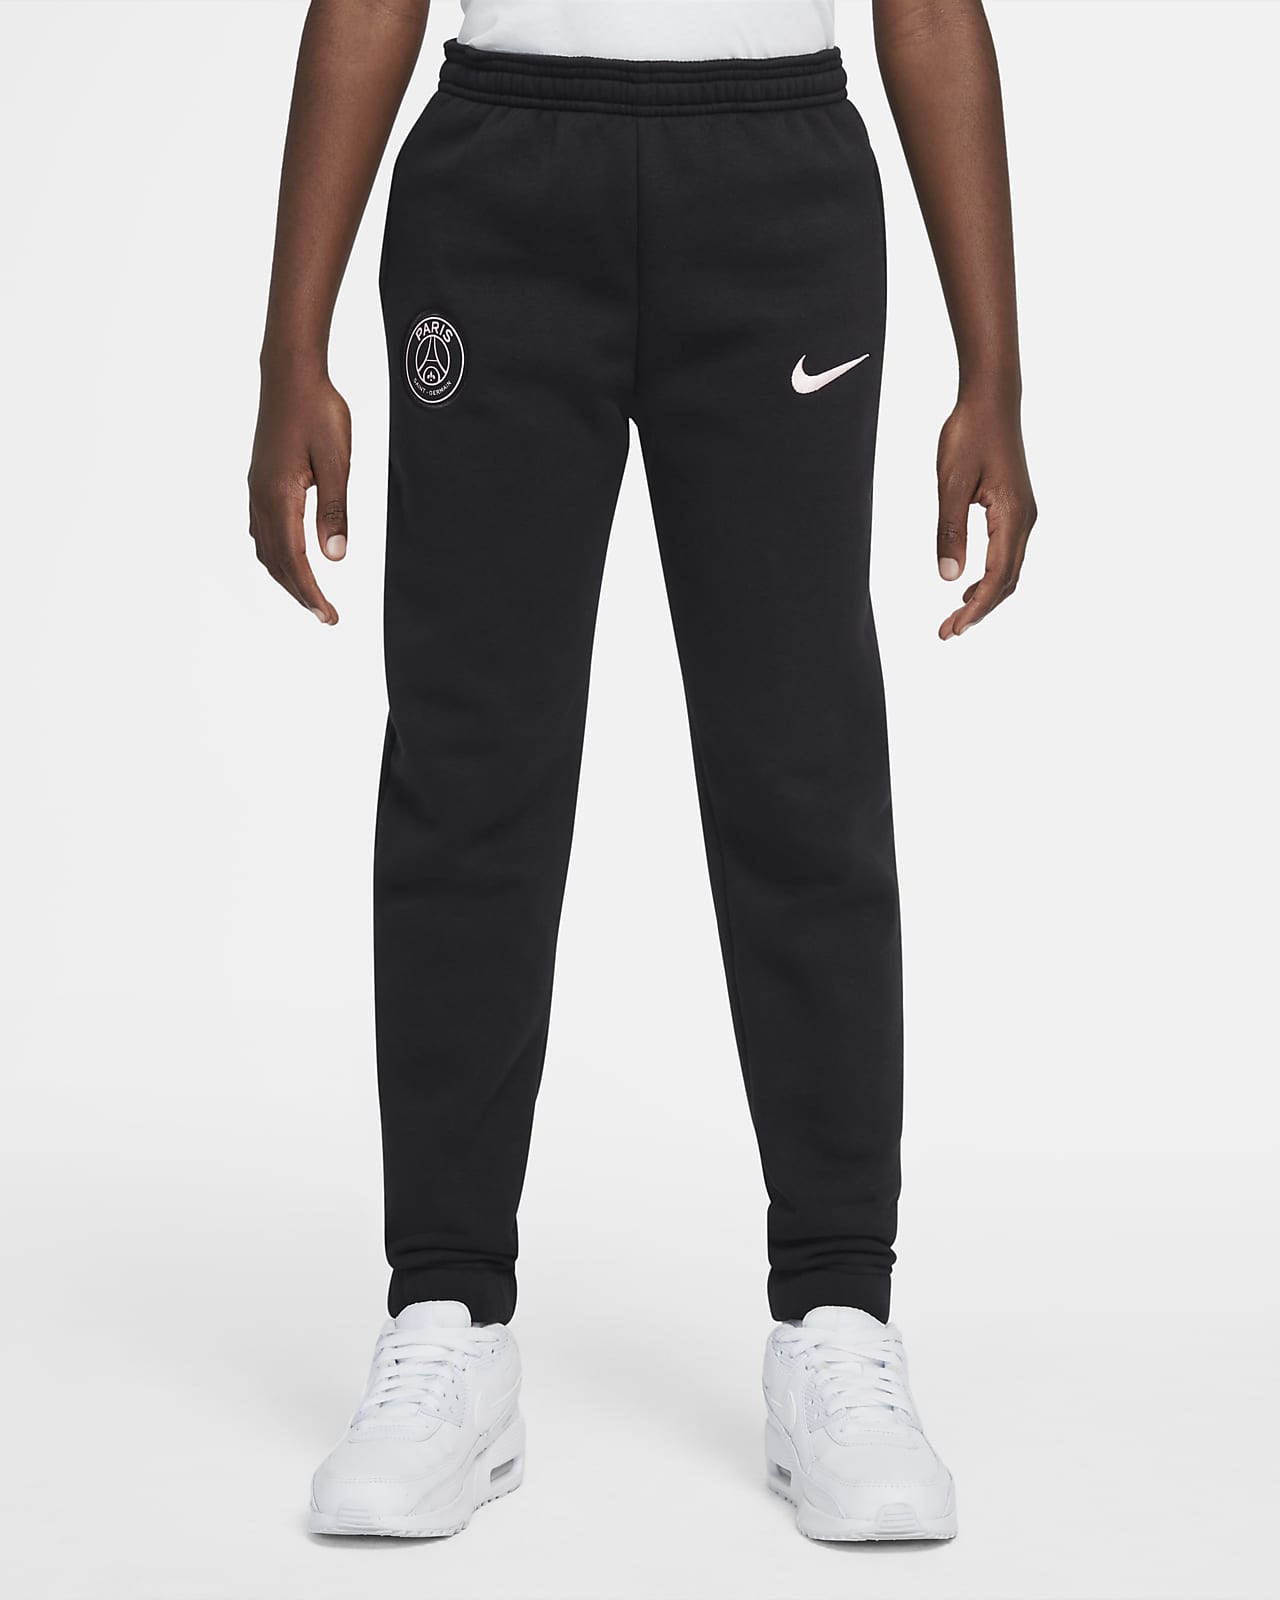 Pantalones fútbol de tejido Fleece para niños talla grande Paris Saint-Germain. Nike.com